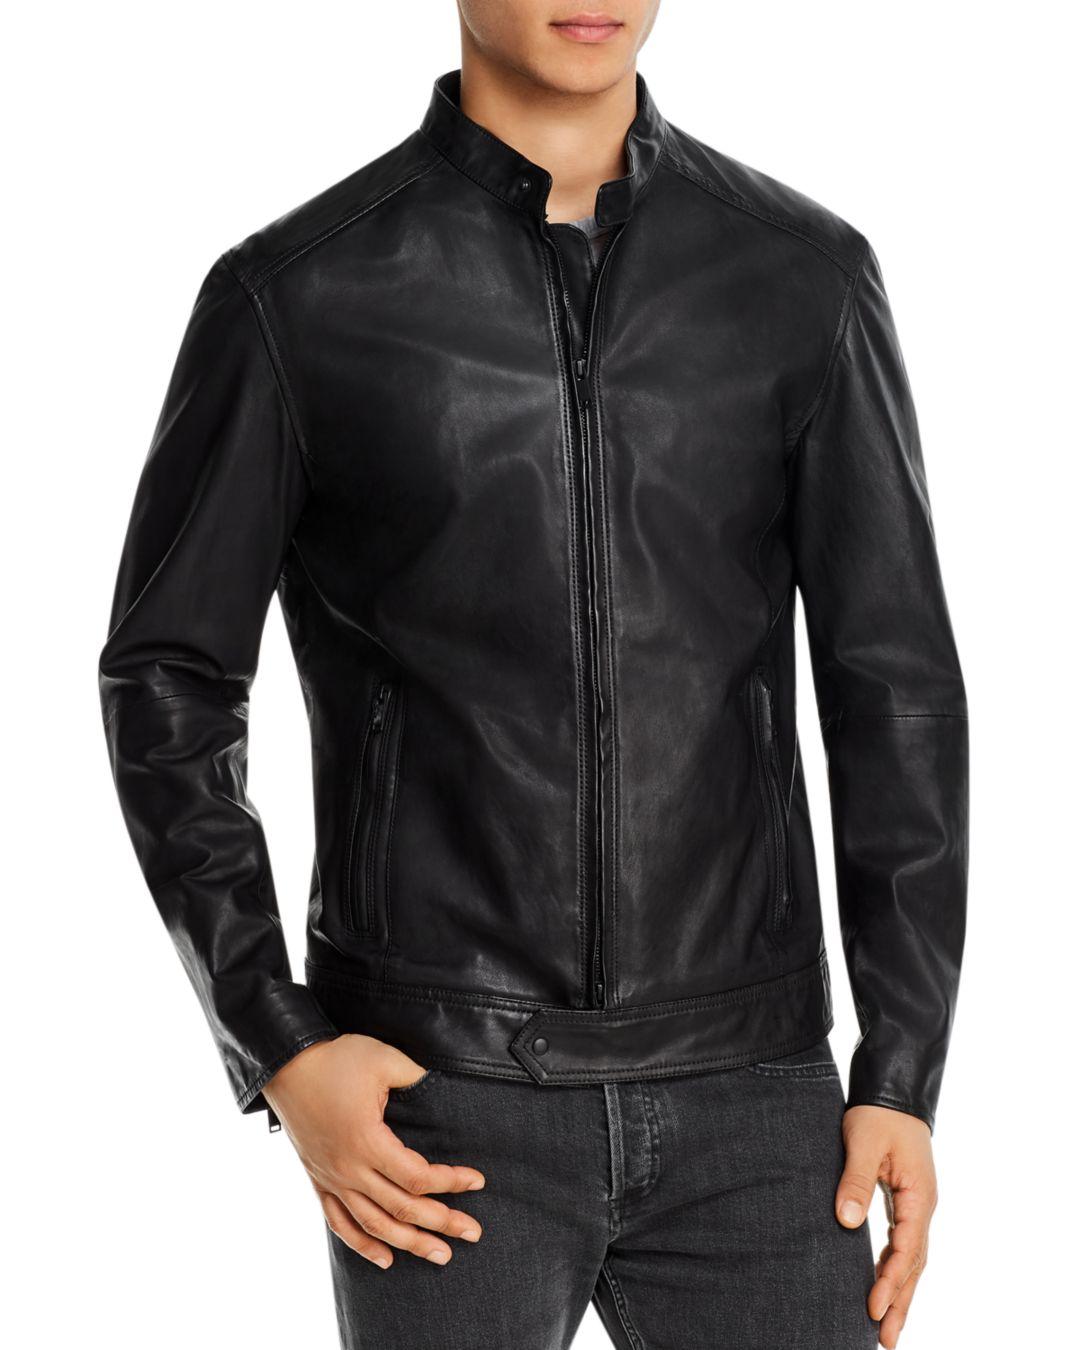 John Varvatos Leather Royce Sheepskin Racer Jacket in Black for Men - Lyst